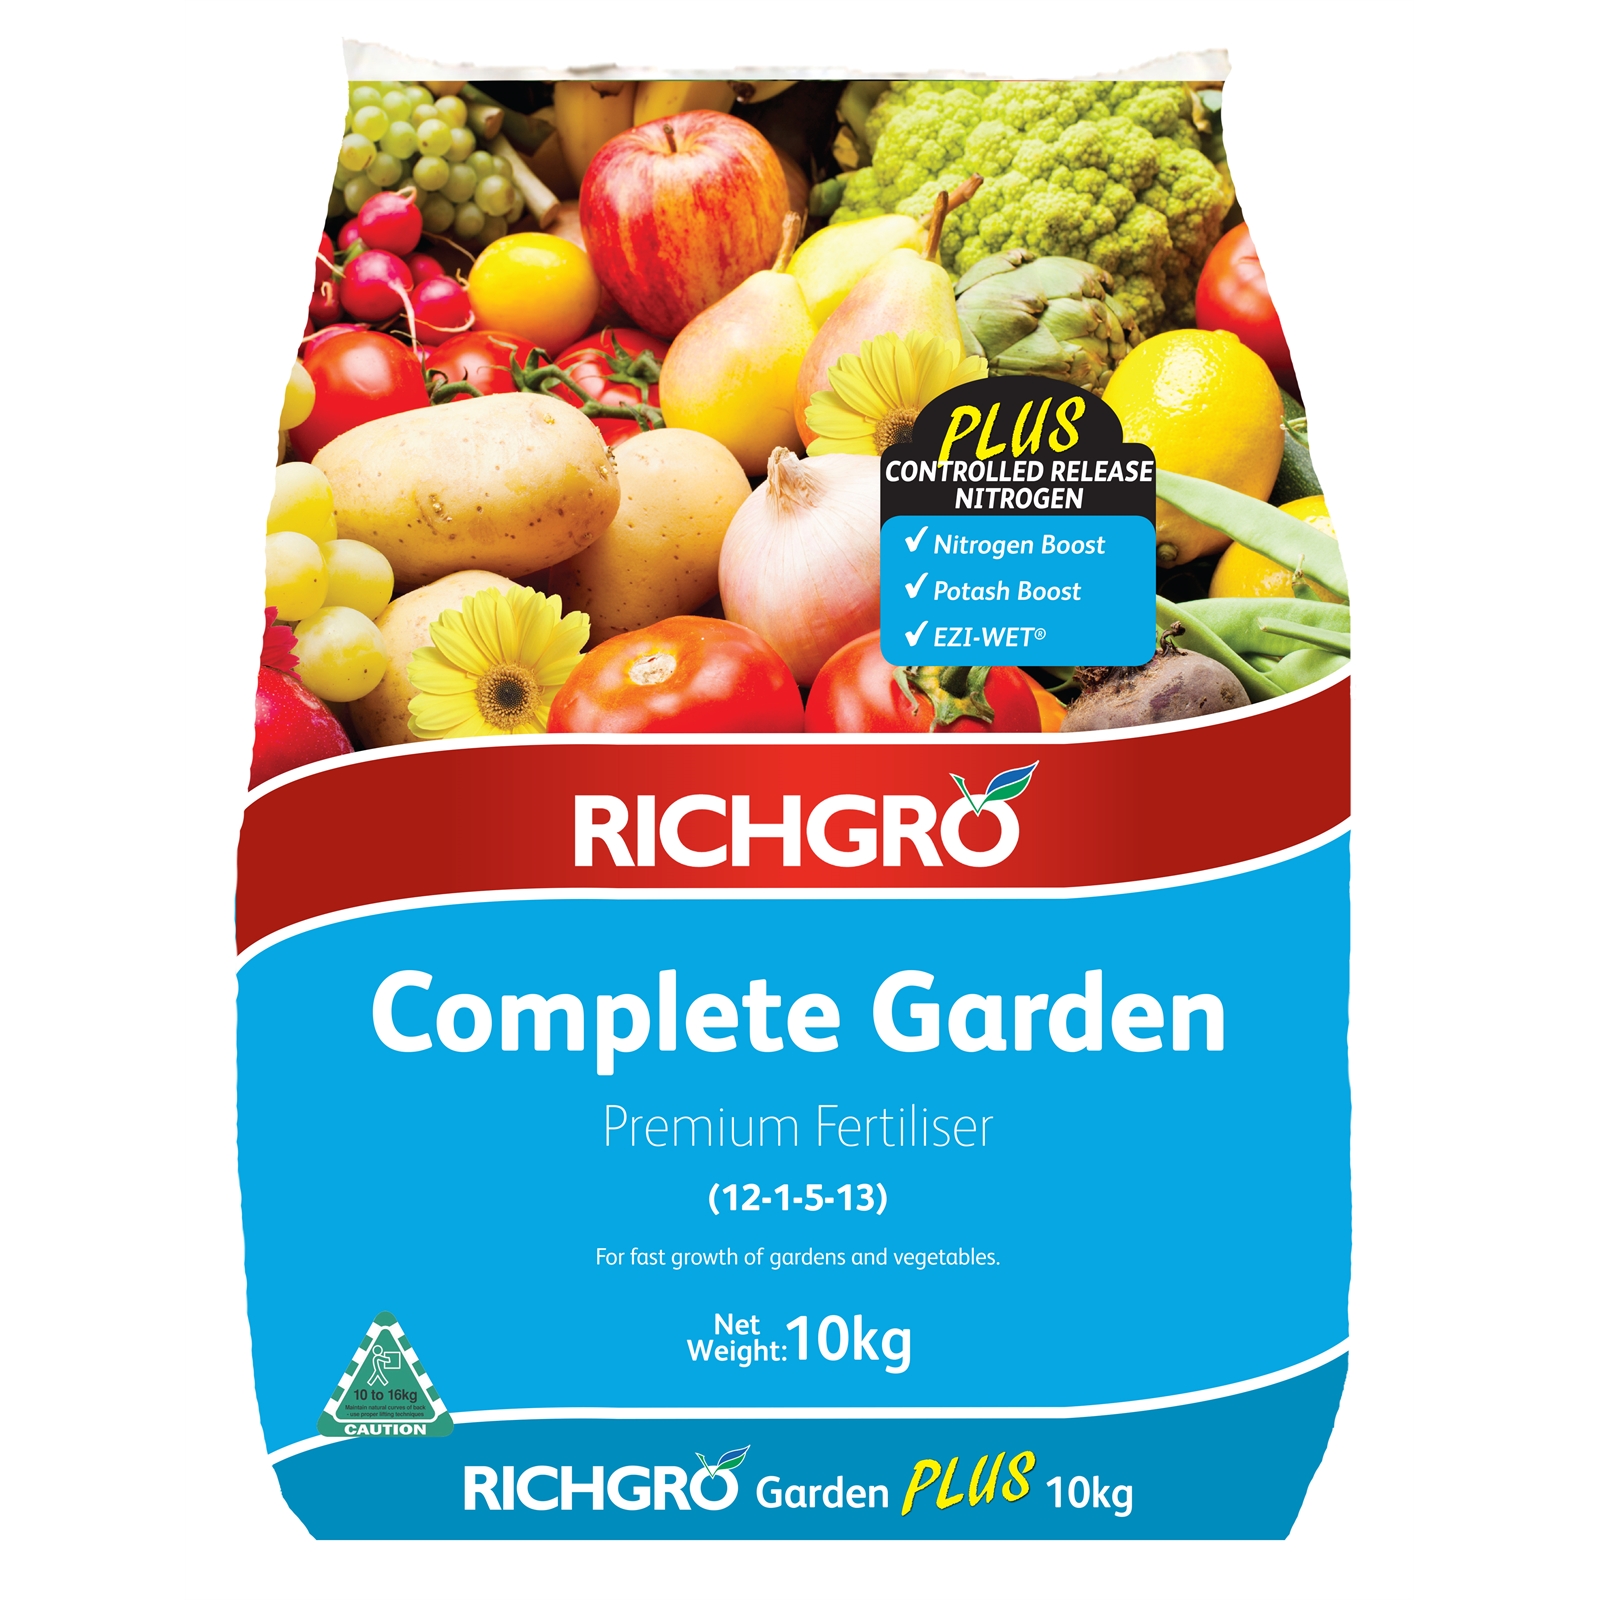 Richgro 10kg Garden Plus Complete Garden Premium Fertiliser